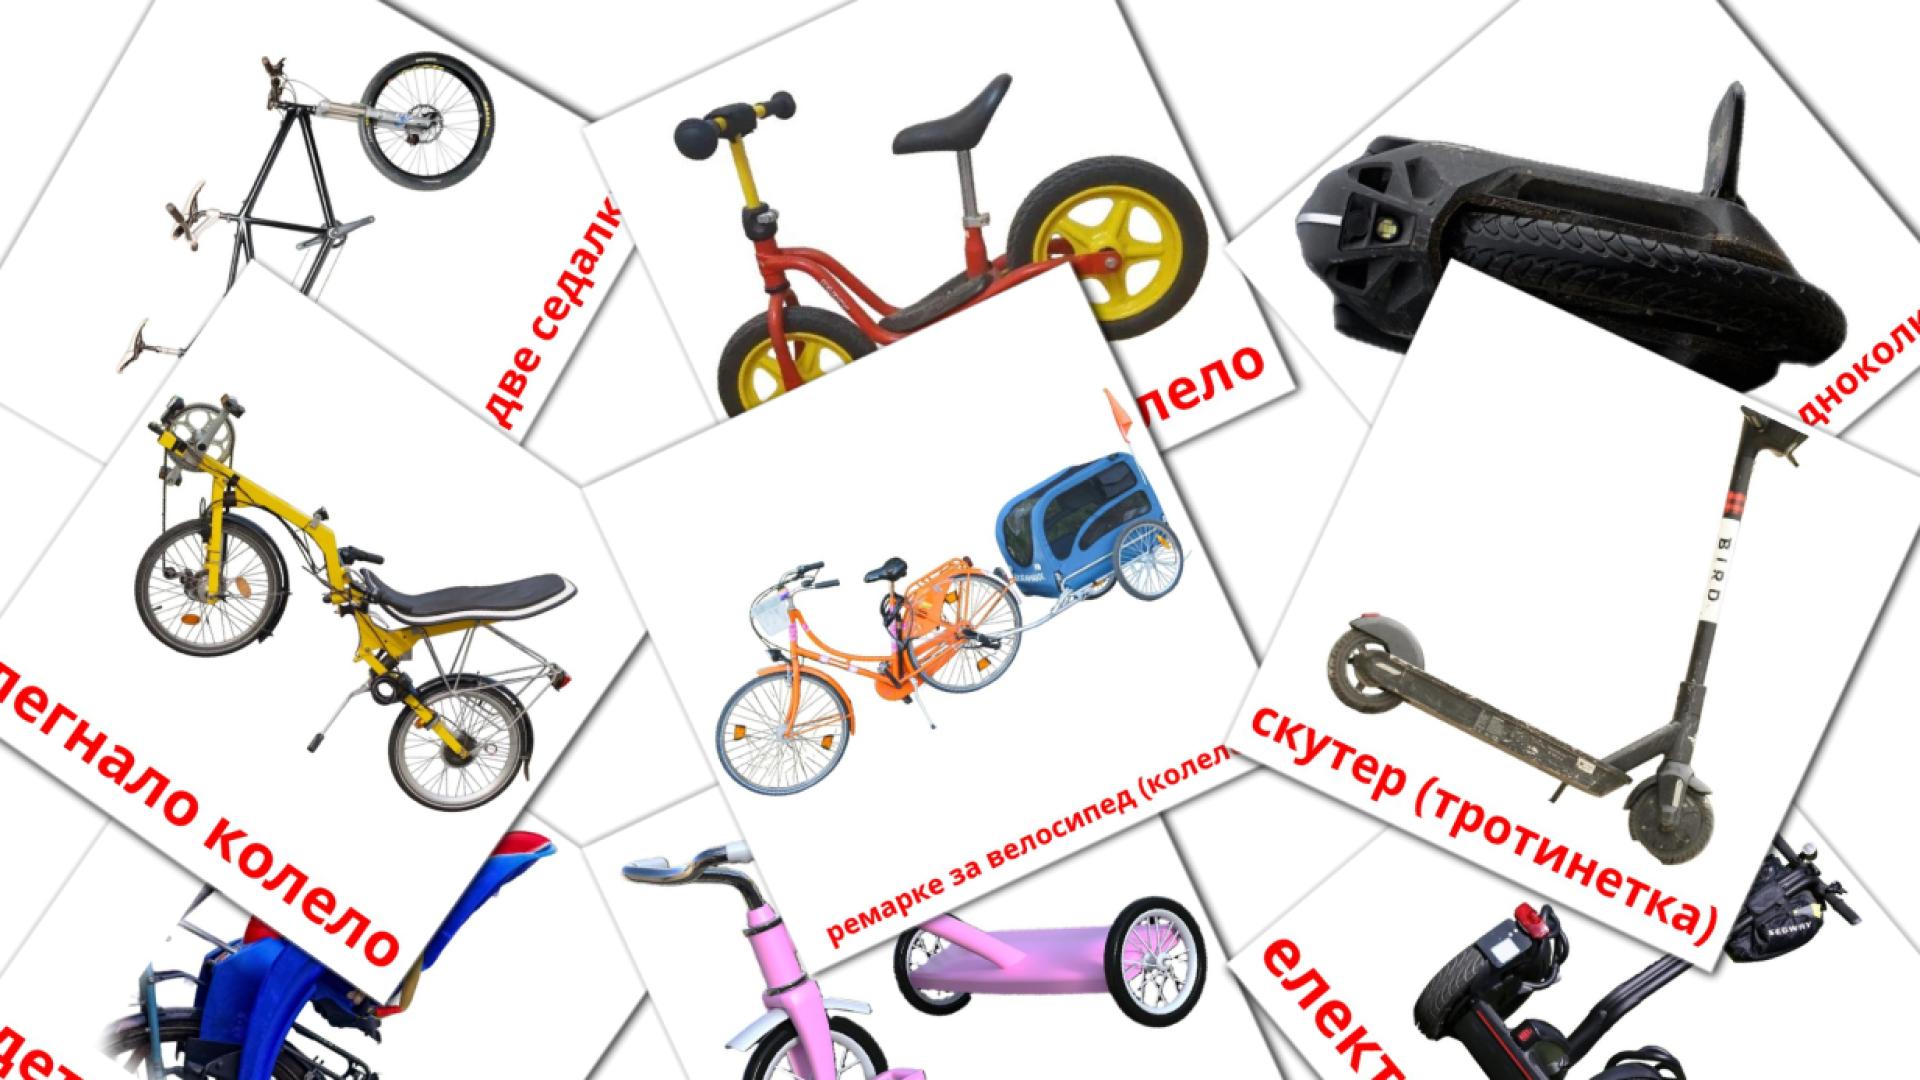 Bicycle transport - bulgarian vocabulary cards